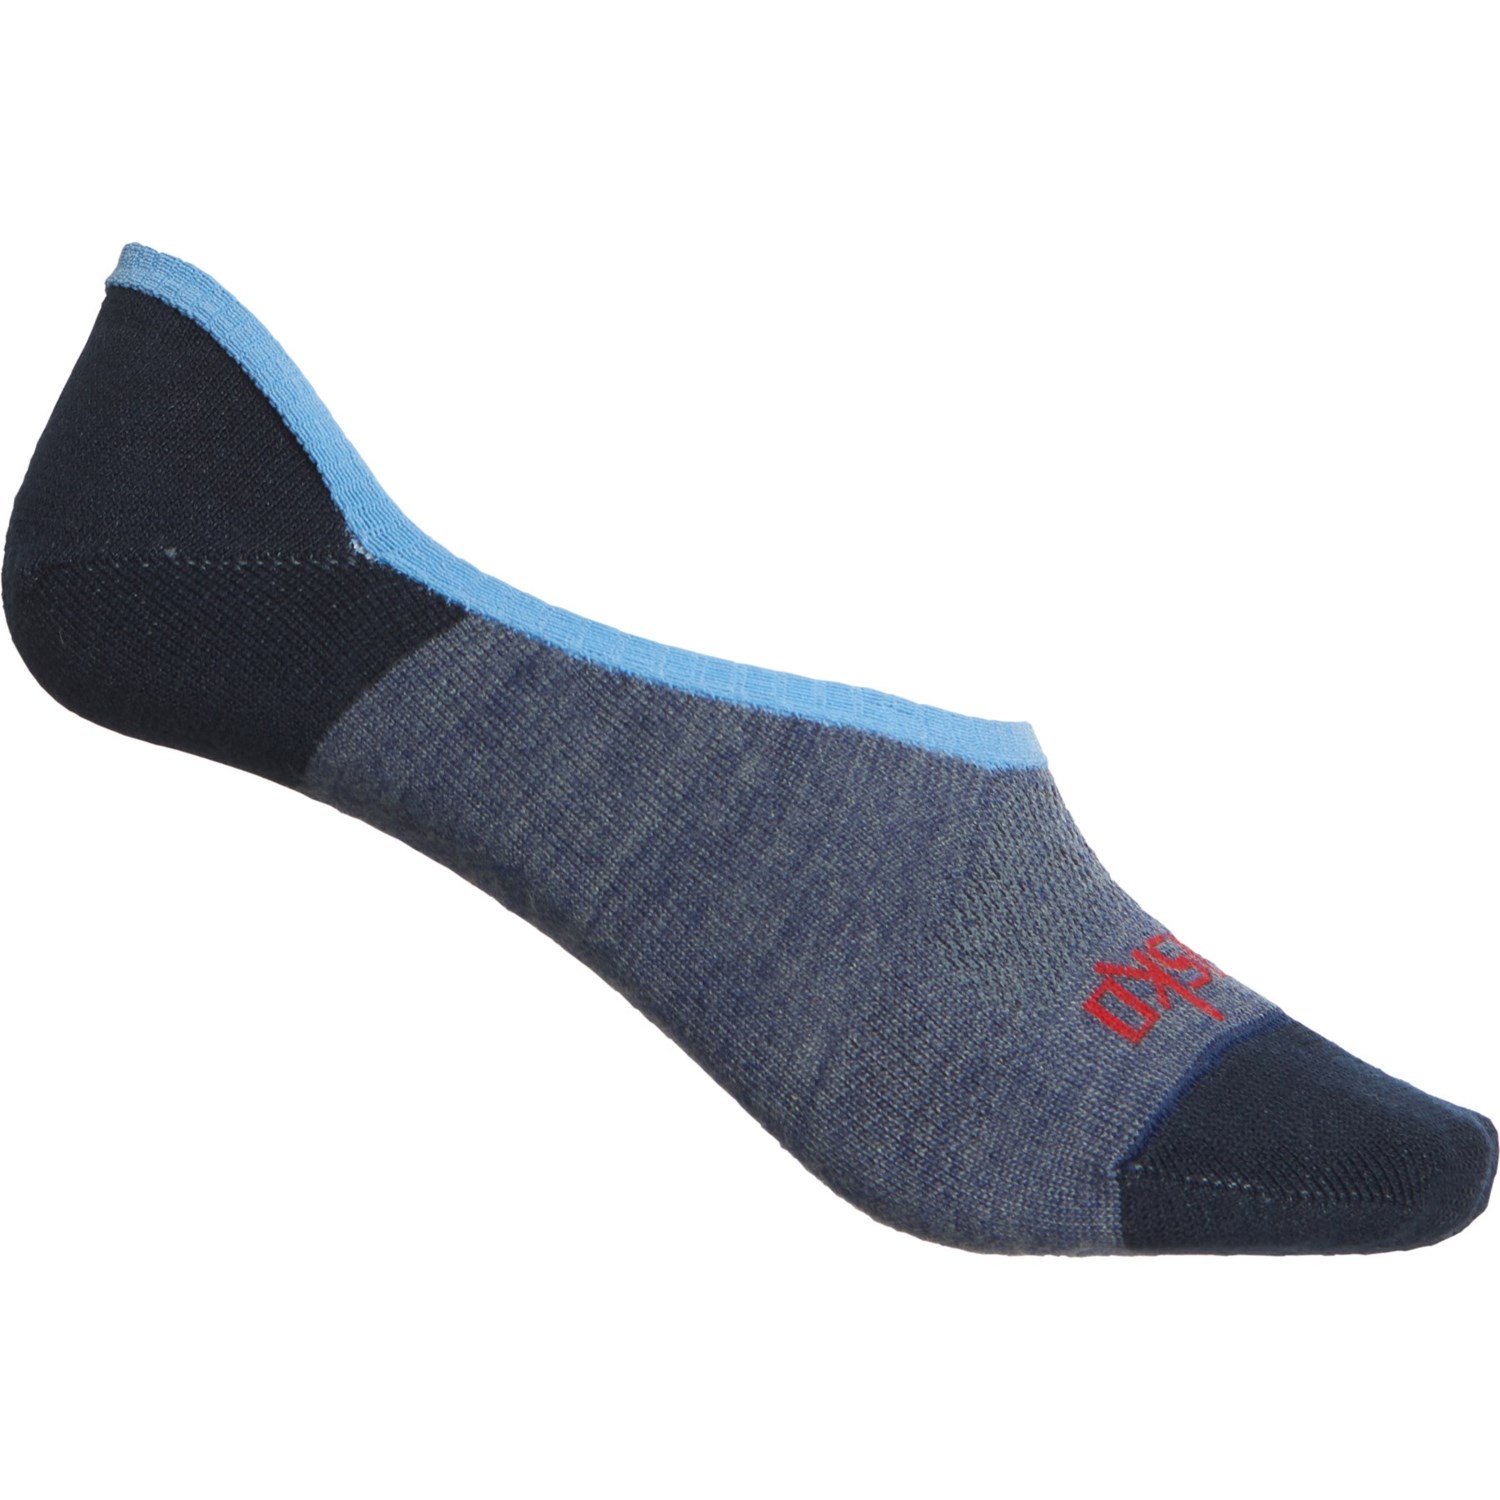 Dansko Two-Tone Ultra Lightweight No-Show Socks (For Women) - Save 50%